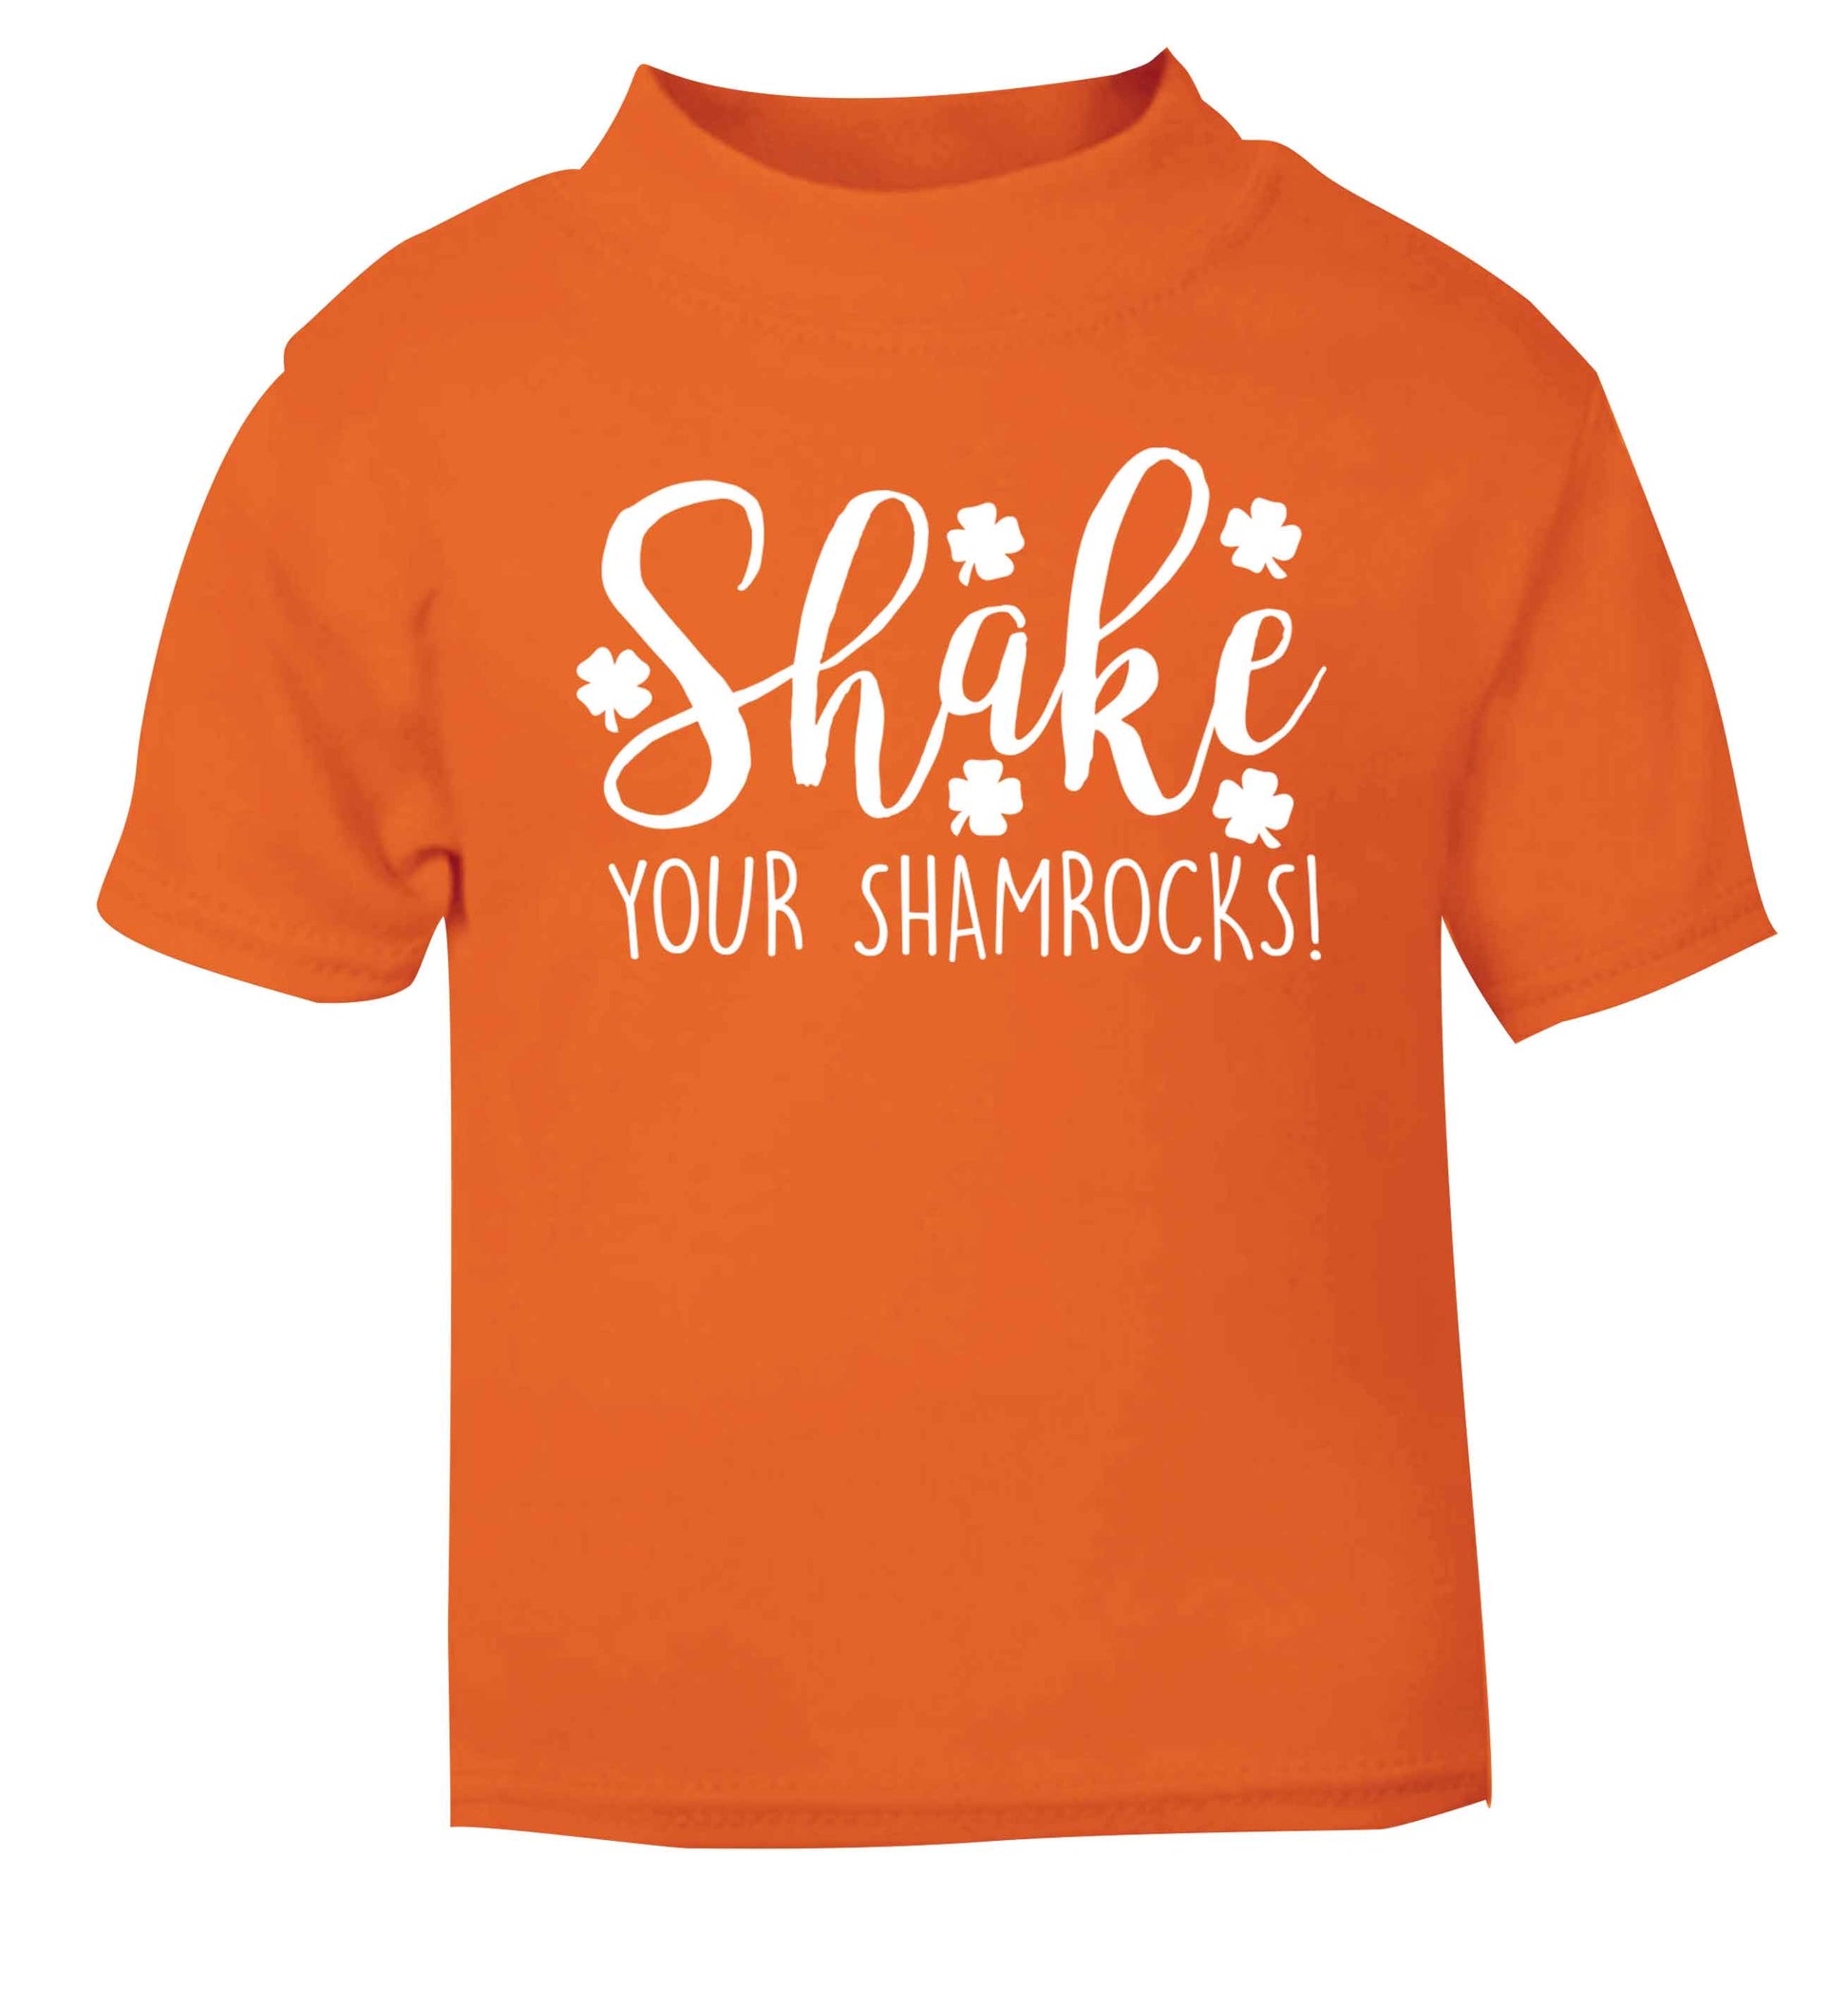 Shake your shamrocks orange baby toddler Tshirt 2 Years